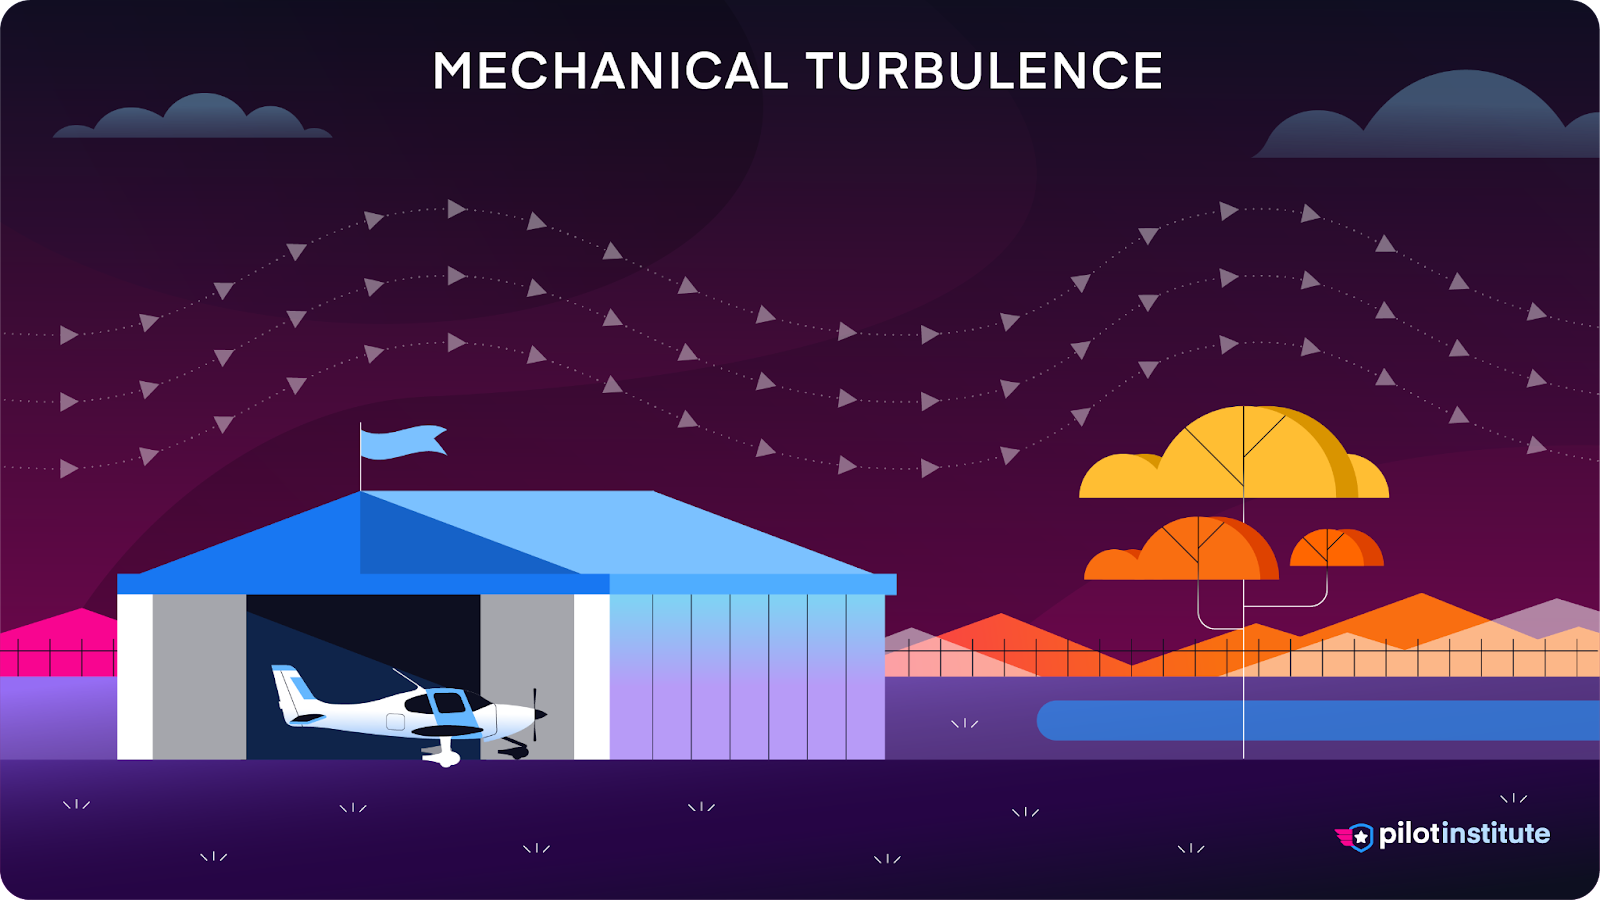 A diagram showing mechanical turbulence.